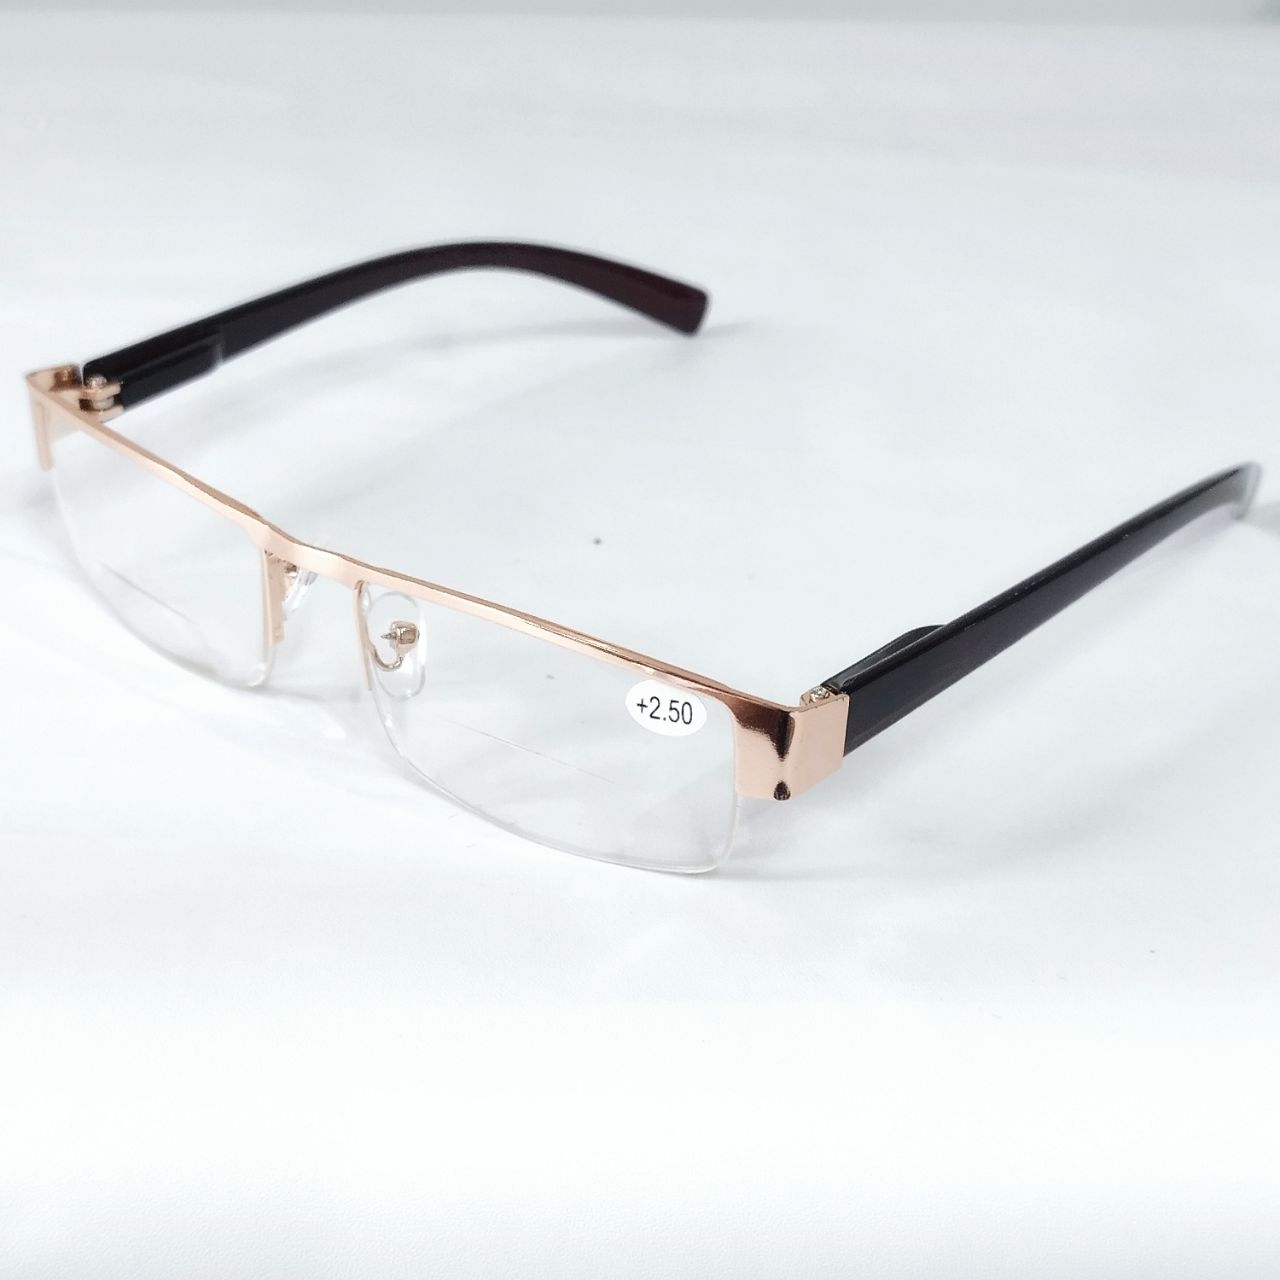 Gold Supra D Bifocal Reading Glasses For Men and Women